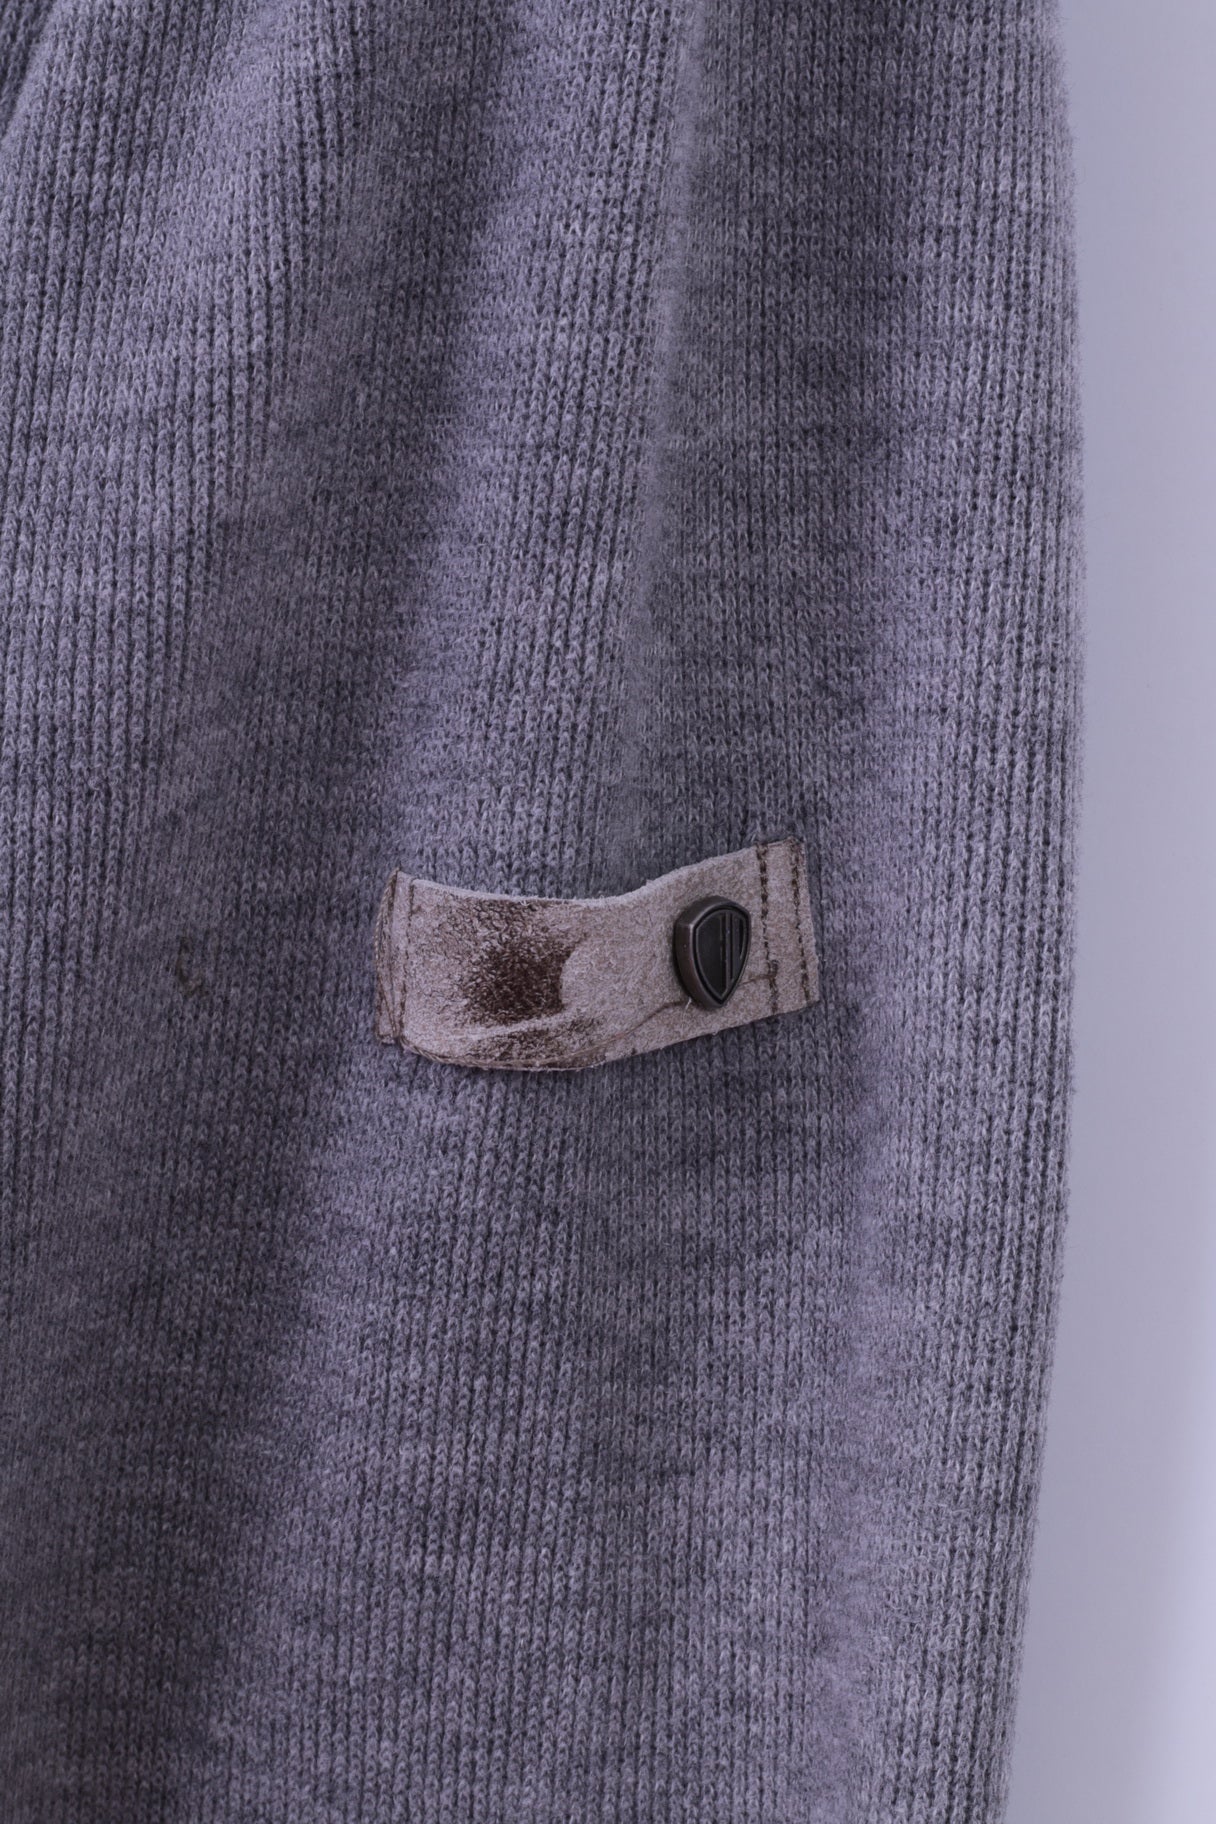 Ben Sherman Mens M Sweatshirt Grey 100% Cotton Zip Neck Classic Plain Top